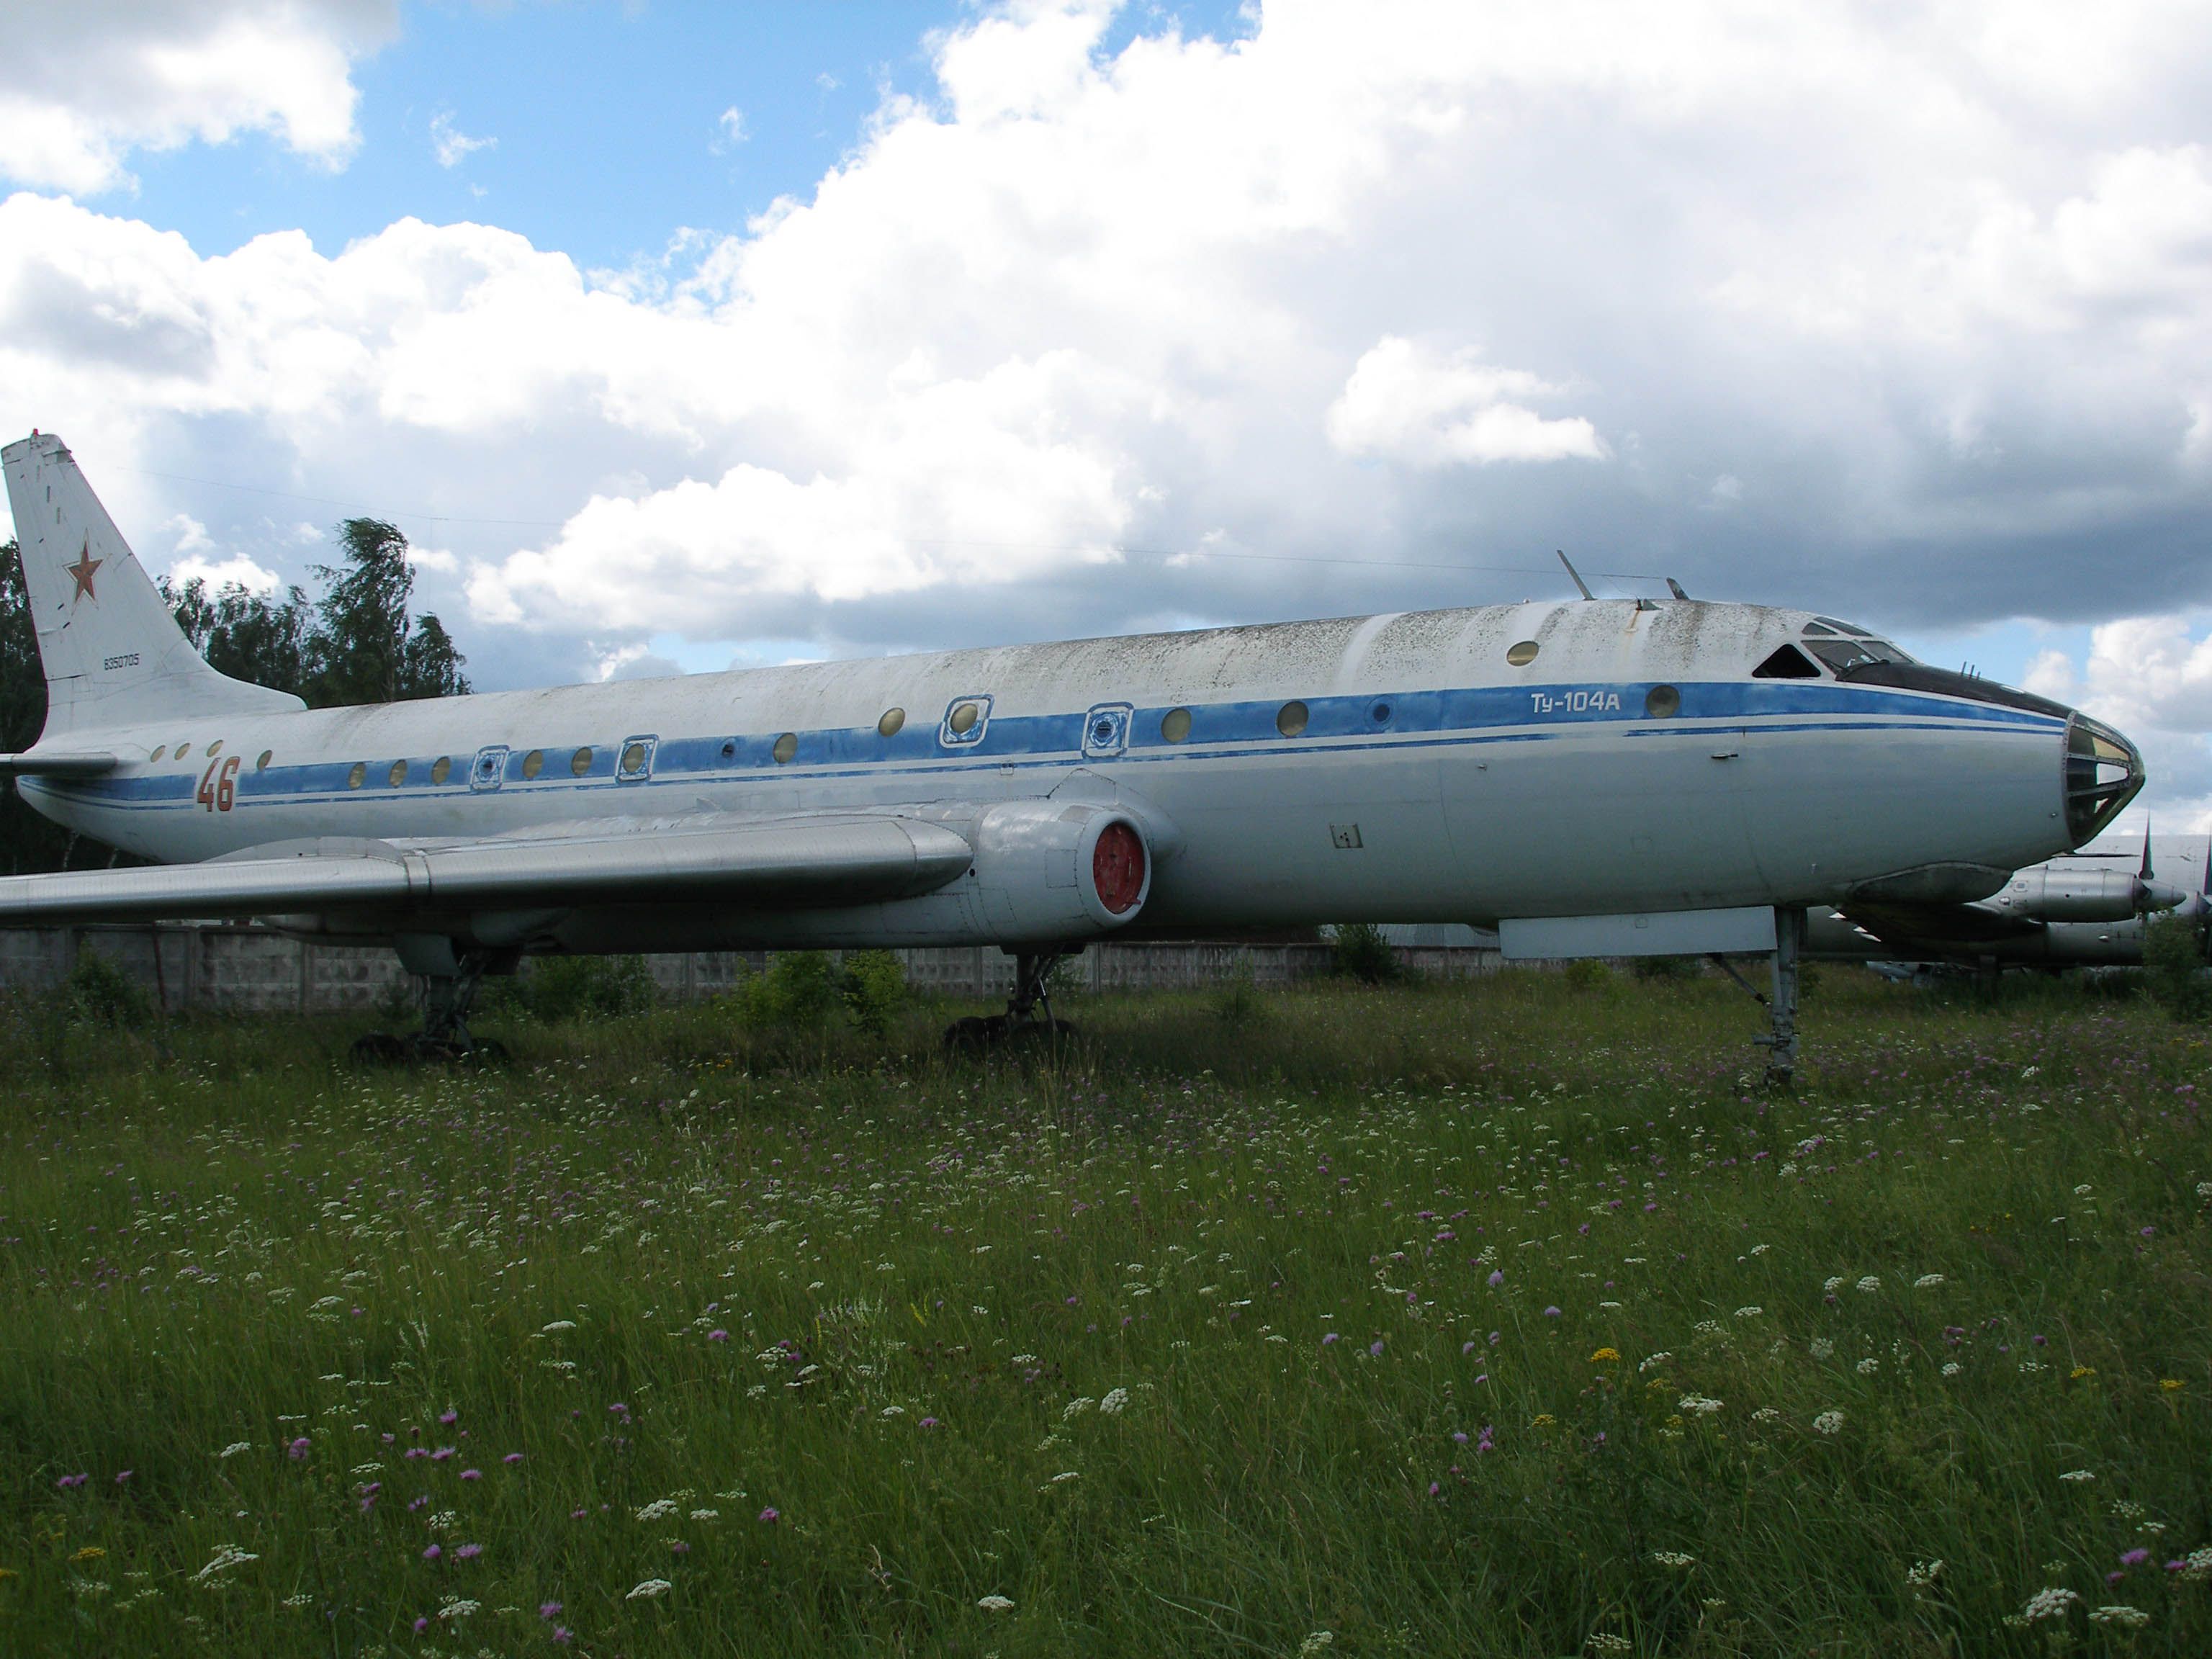 A Tupolev Tu-104 parked in a field.